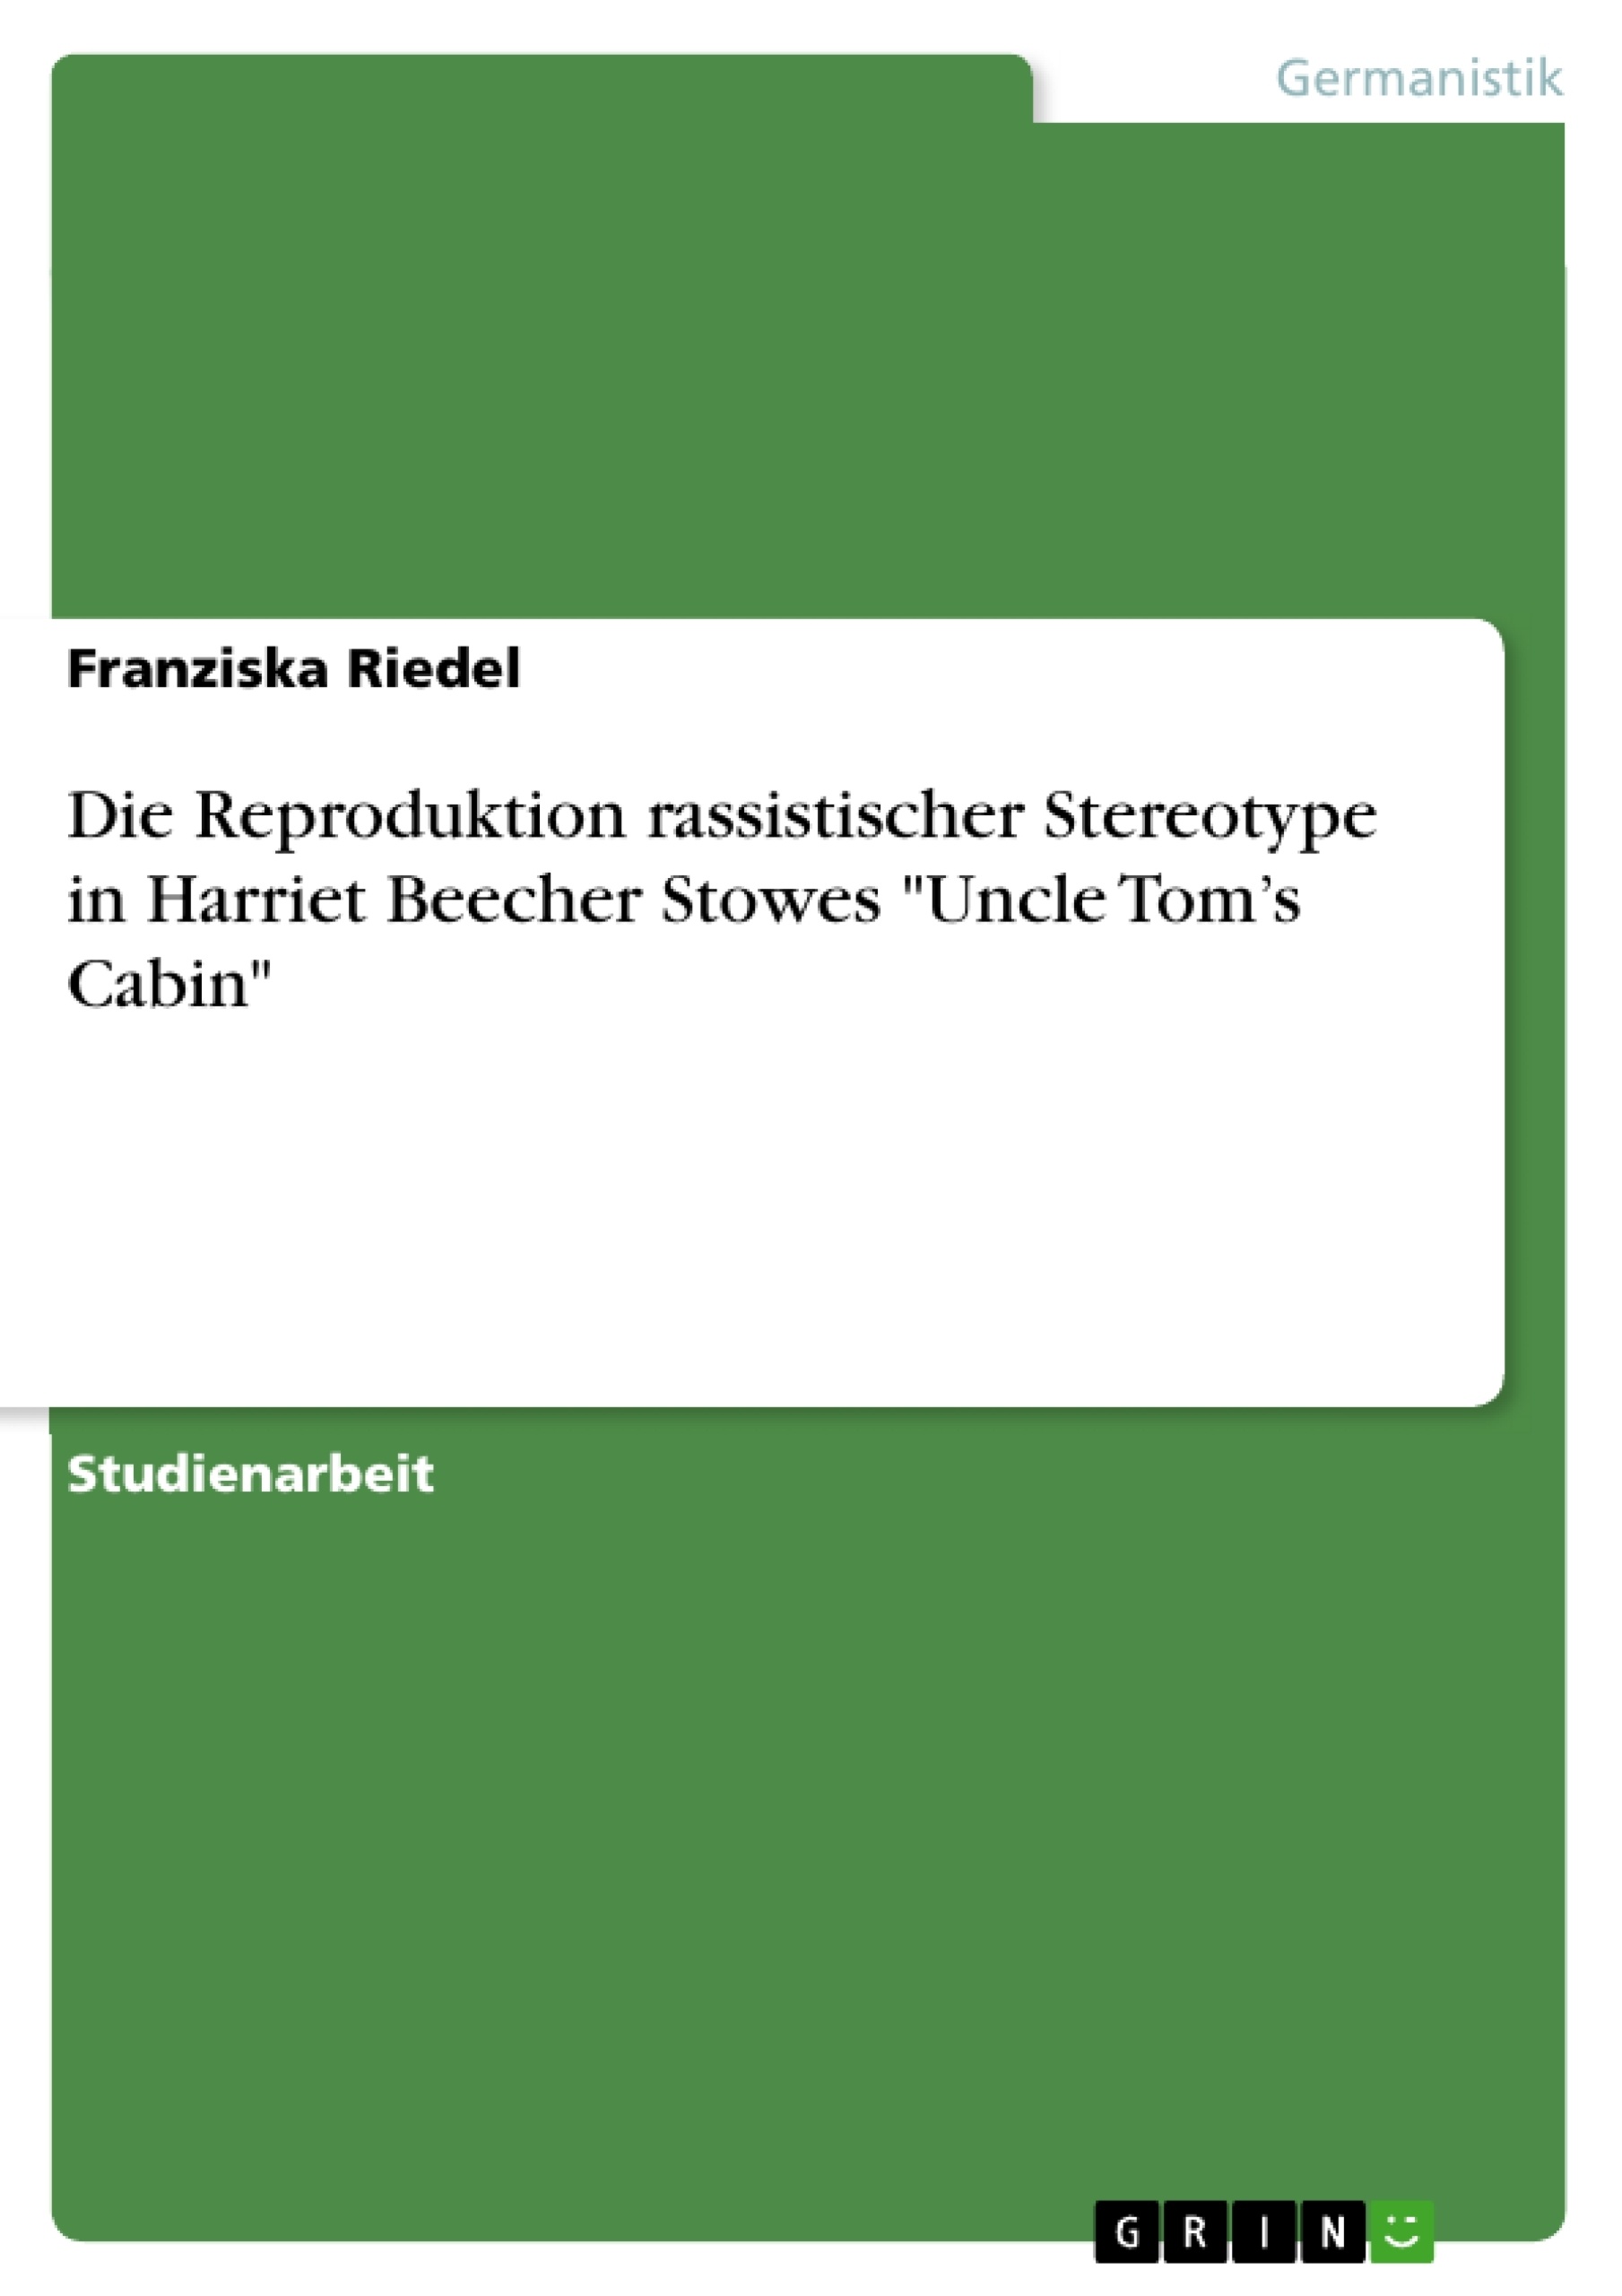 Title: Die Reproduktion rassistischer Stereotype in Harriet Beecher Stowes "Uncle Tom’s Cabin"